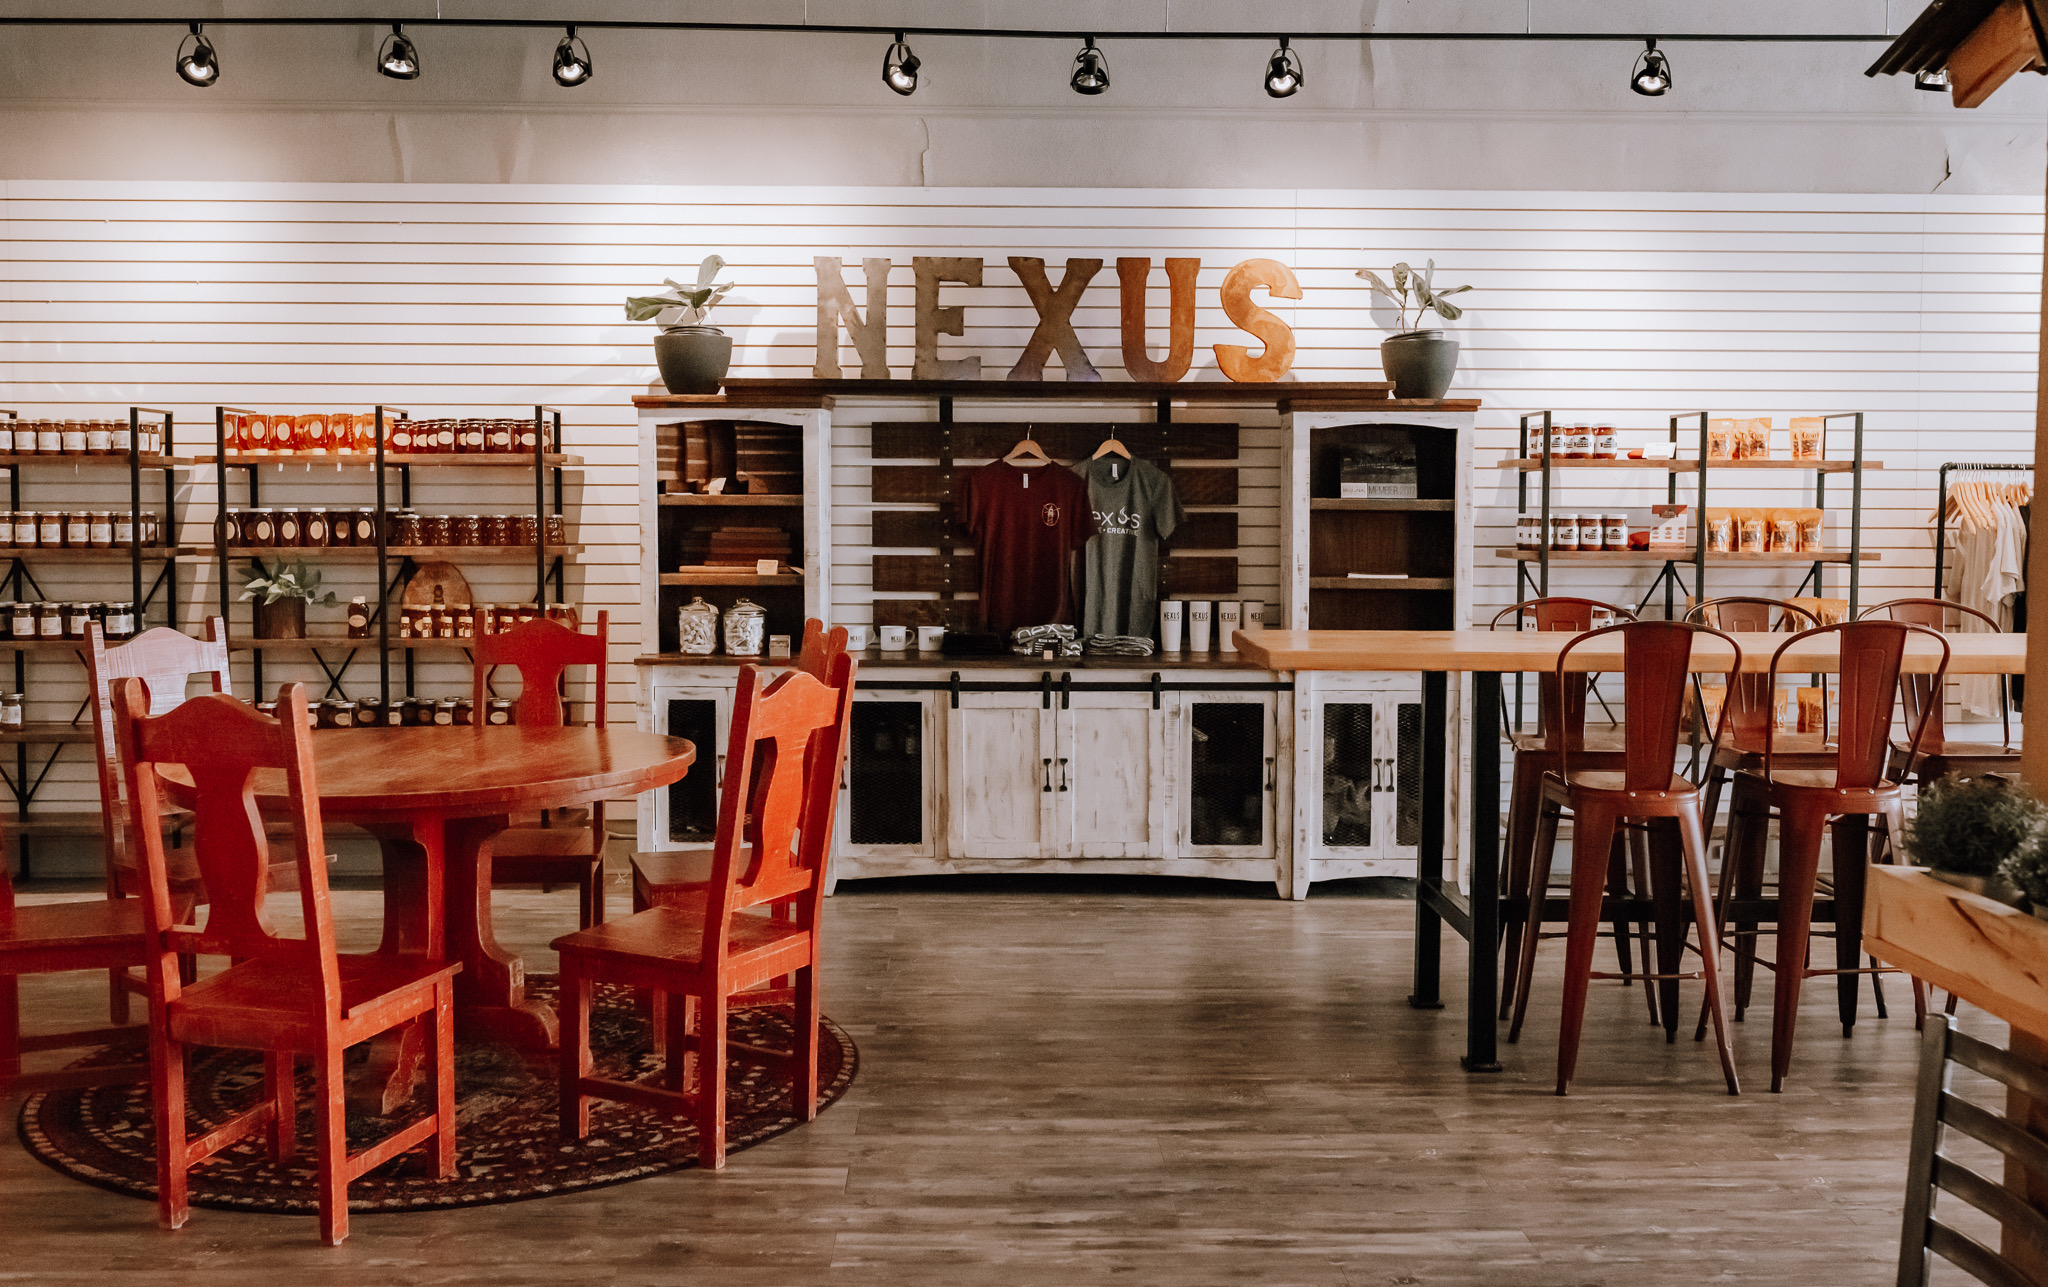 Nexus Coffee and Creative